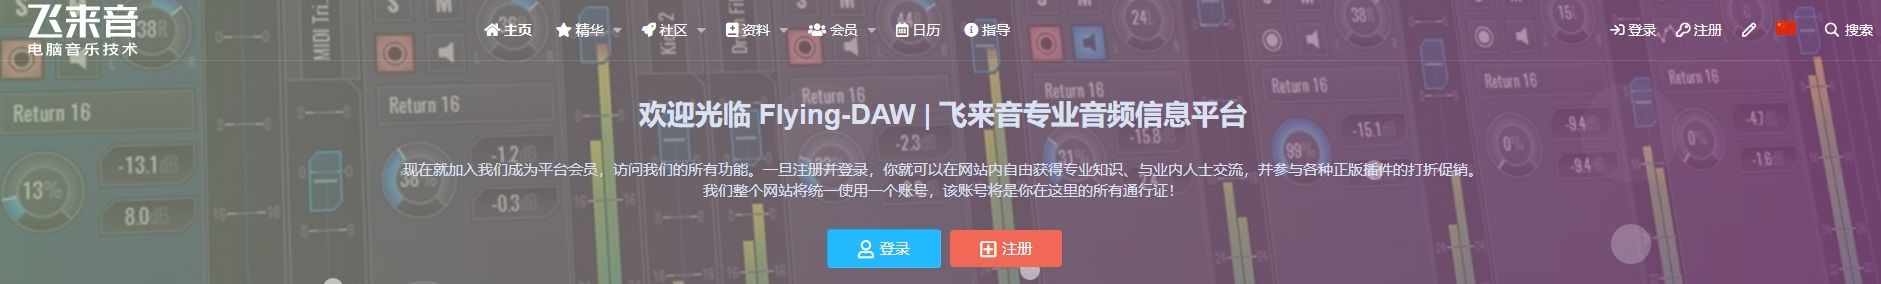 Flying-DAW - Welcome.jpg